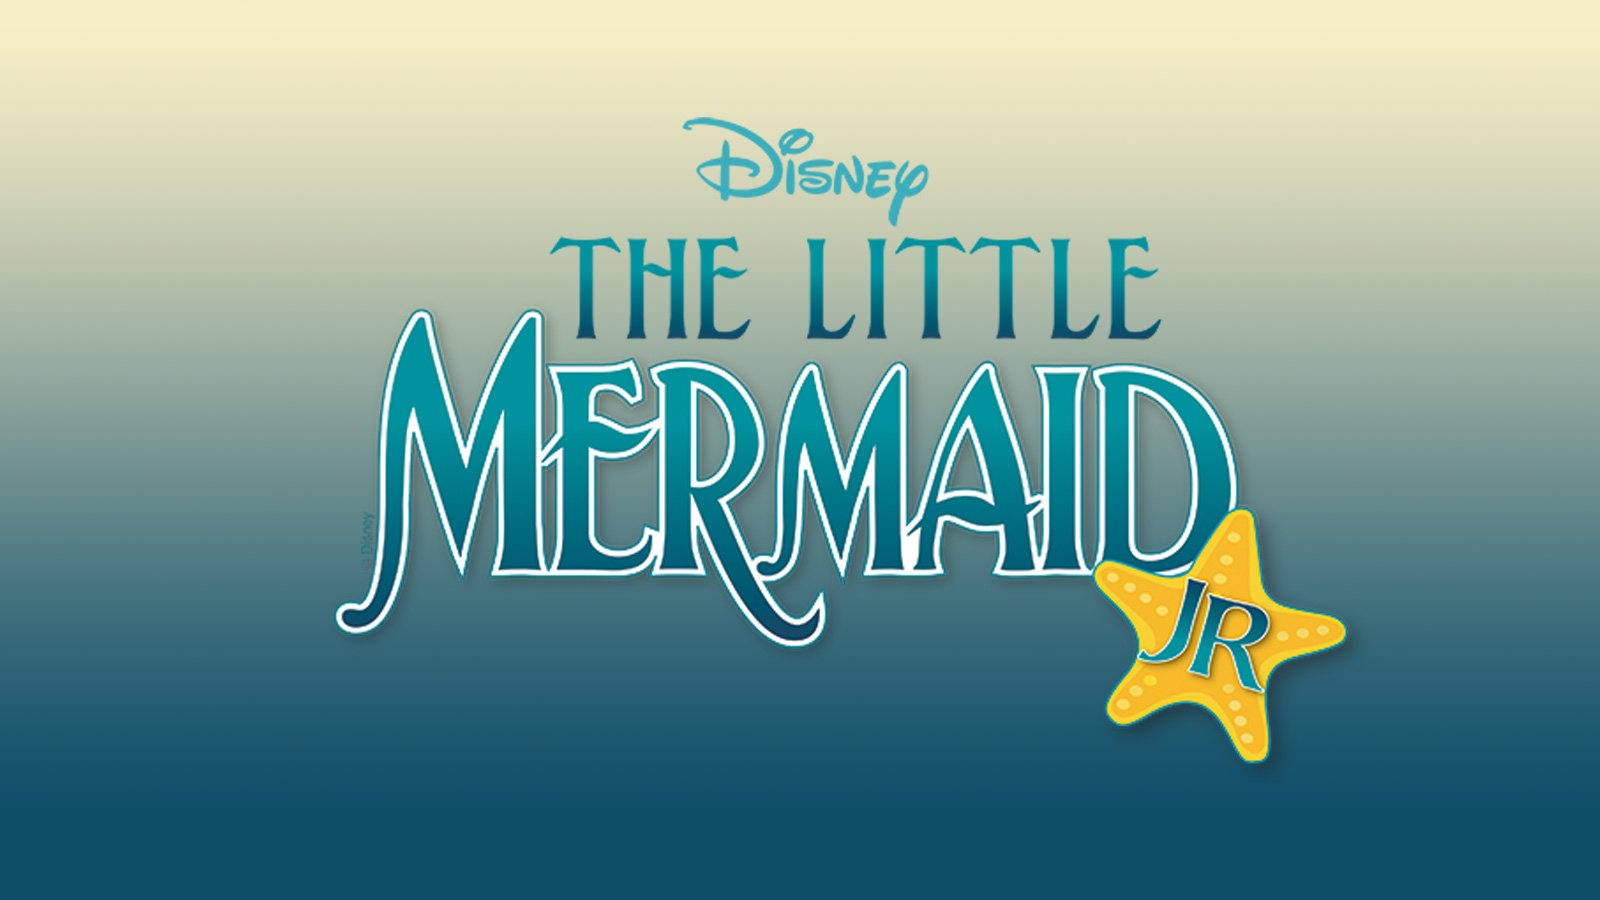 Disney The Little Mermaid JR.